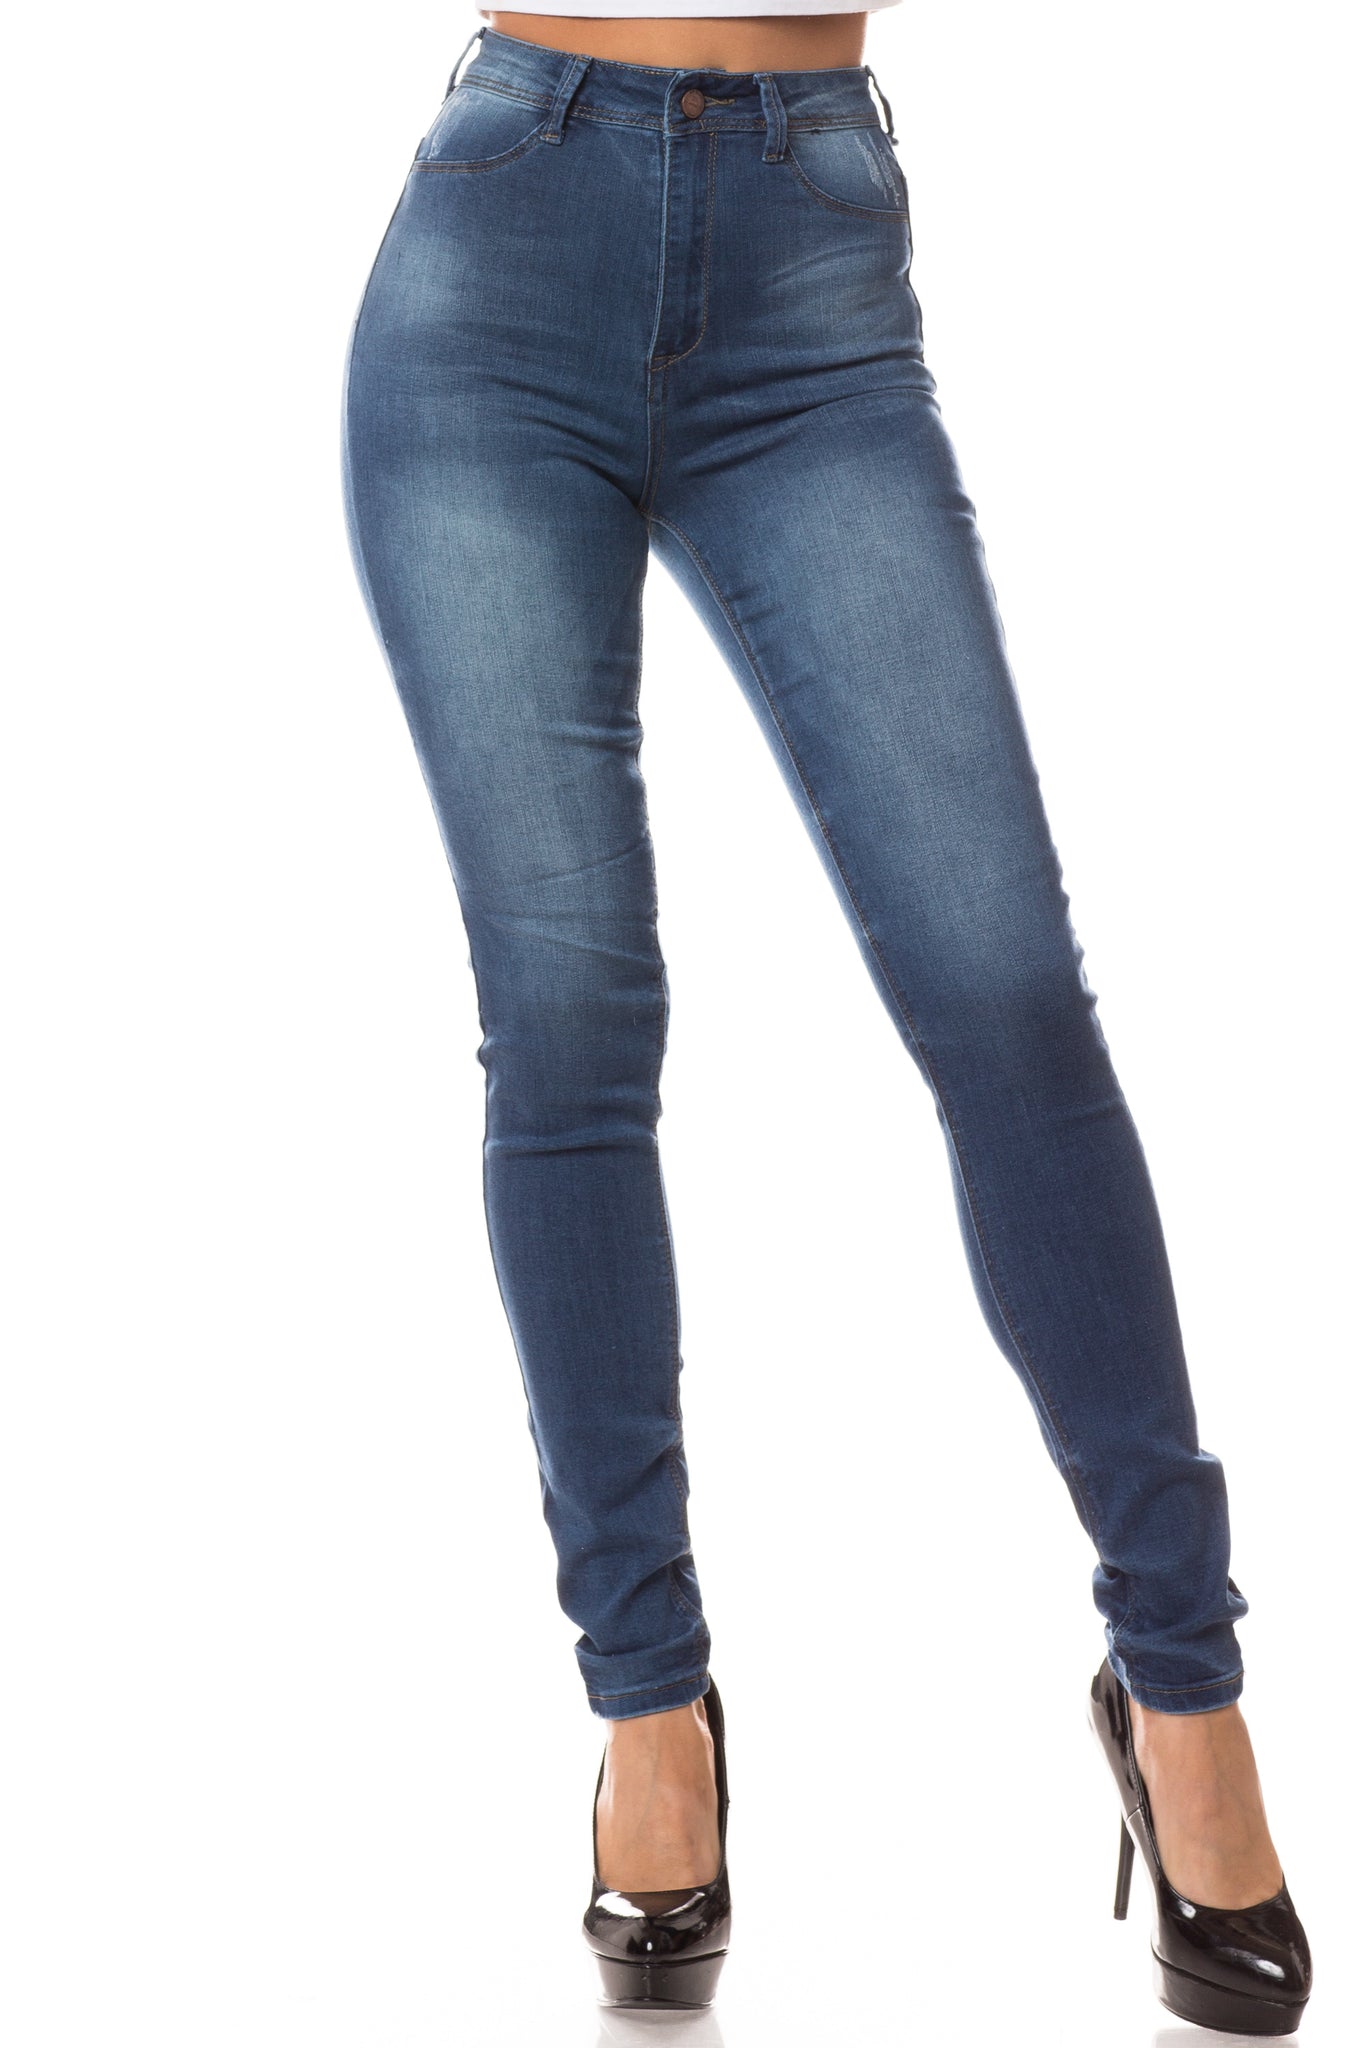 Super High Waisted Basic Skinny Jeans – Aphrodite Jeans